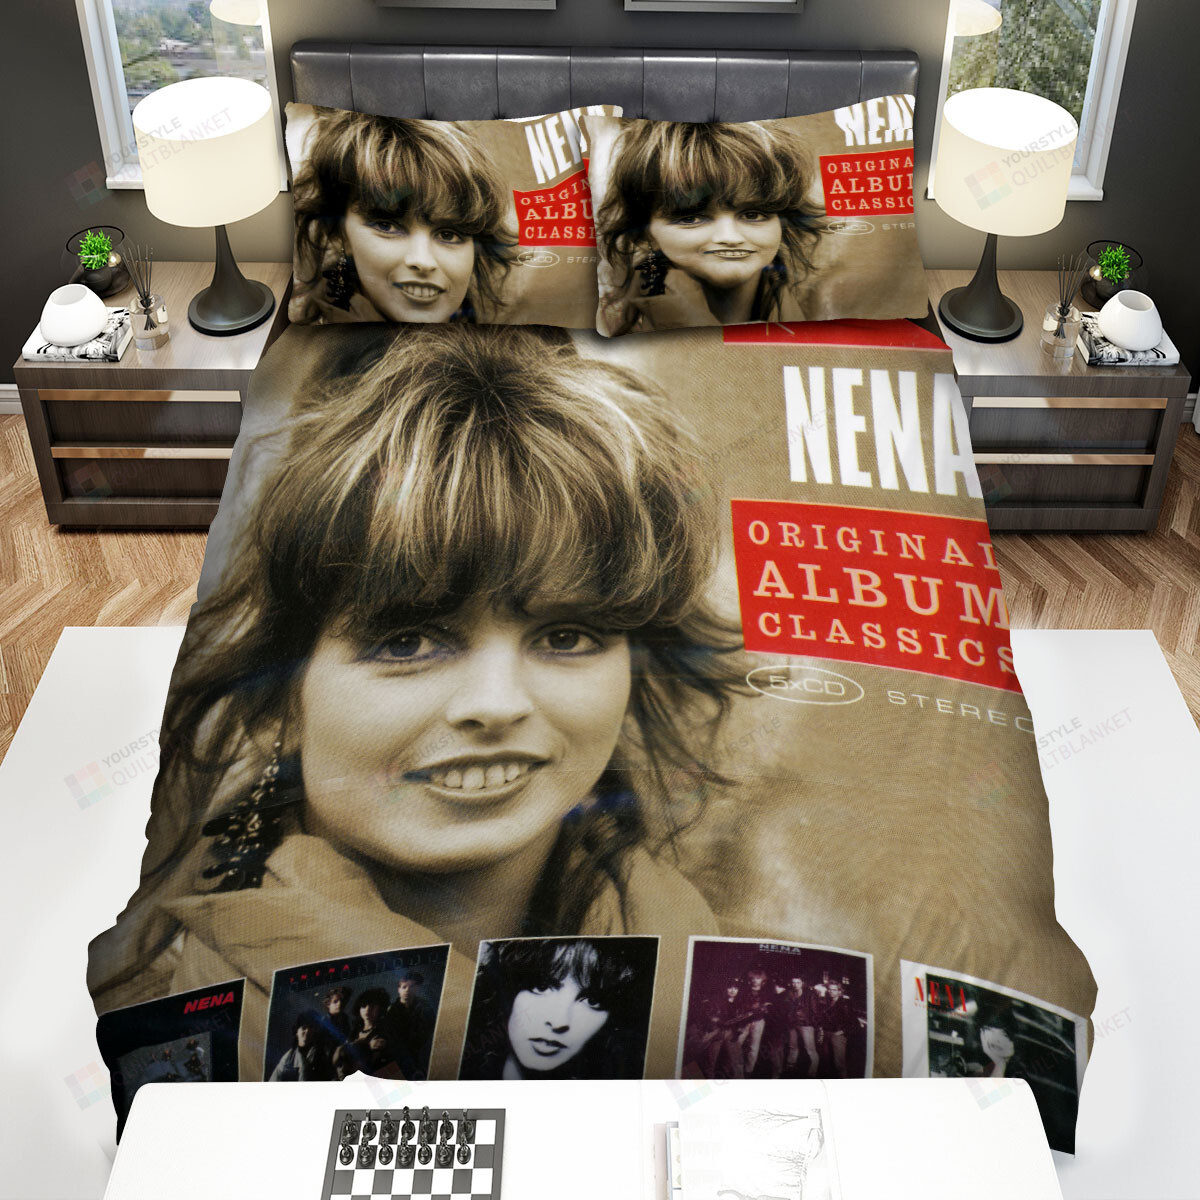 Nena Orginal Album Classics Album Cover Bed Sheets Spread Comforter Duvet Cover Bedding Sets